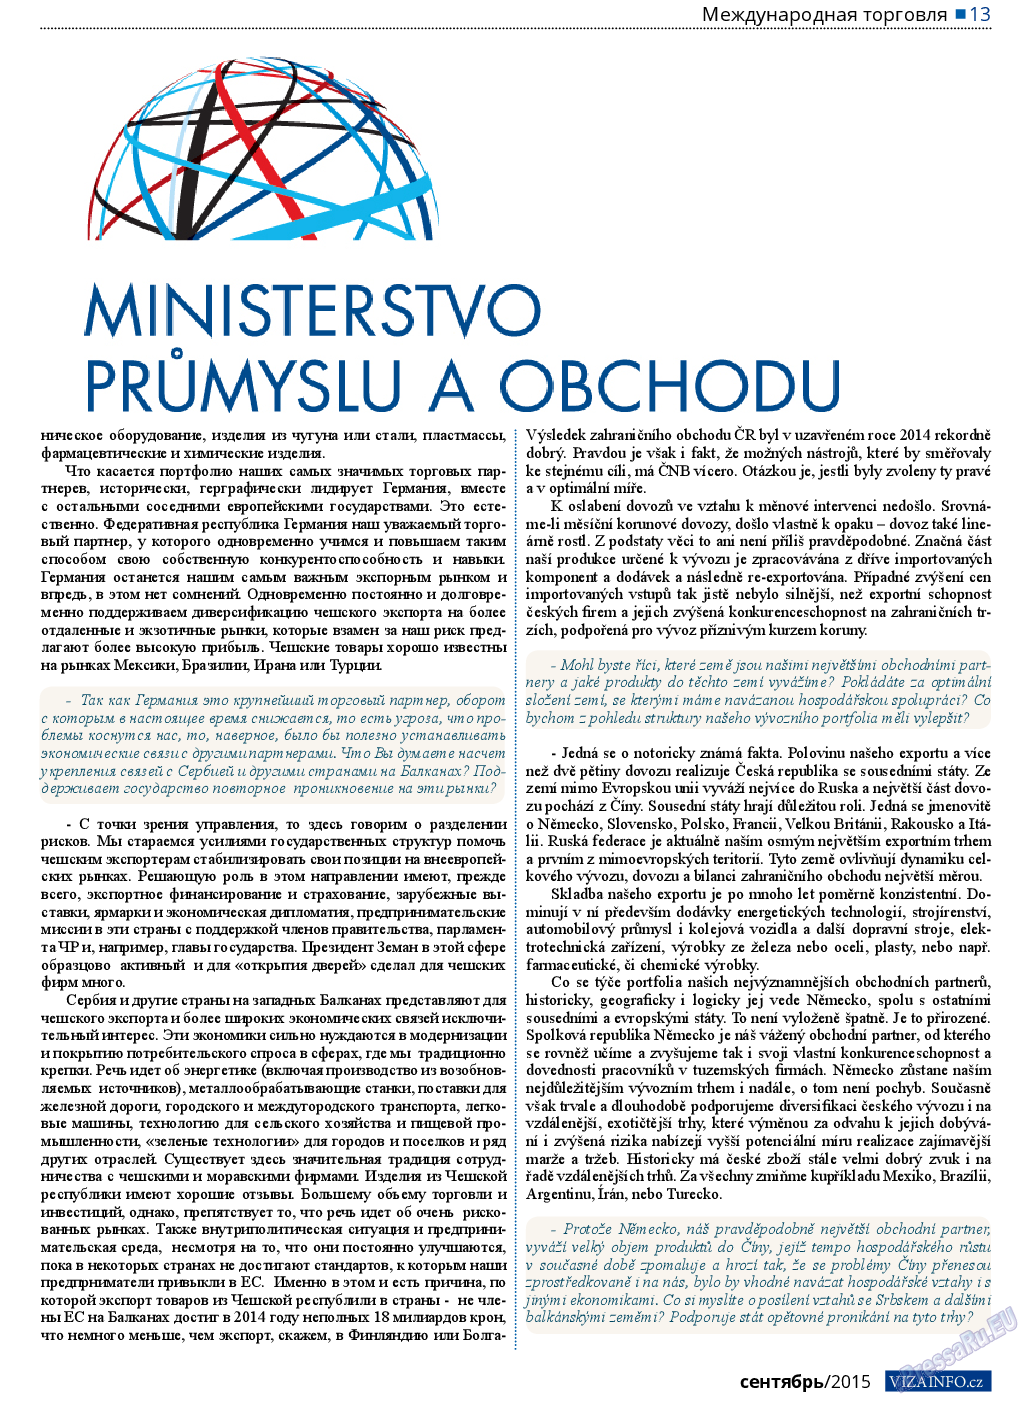 Vizainfo.cz (газета). 2015 год, номер 72, стр. 13